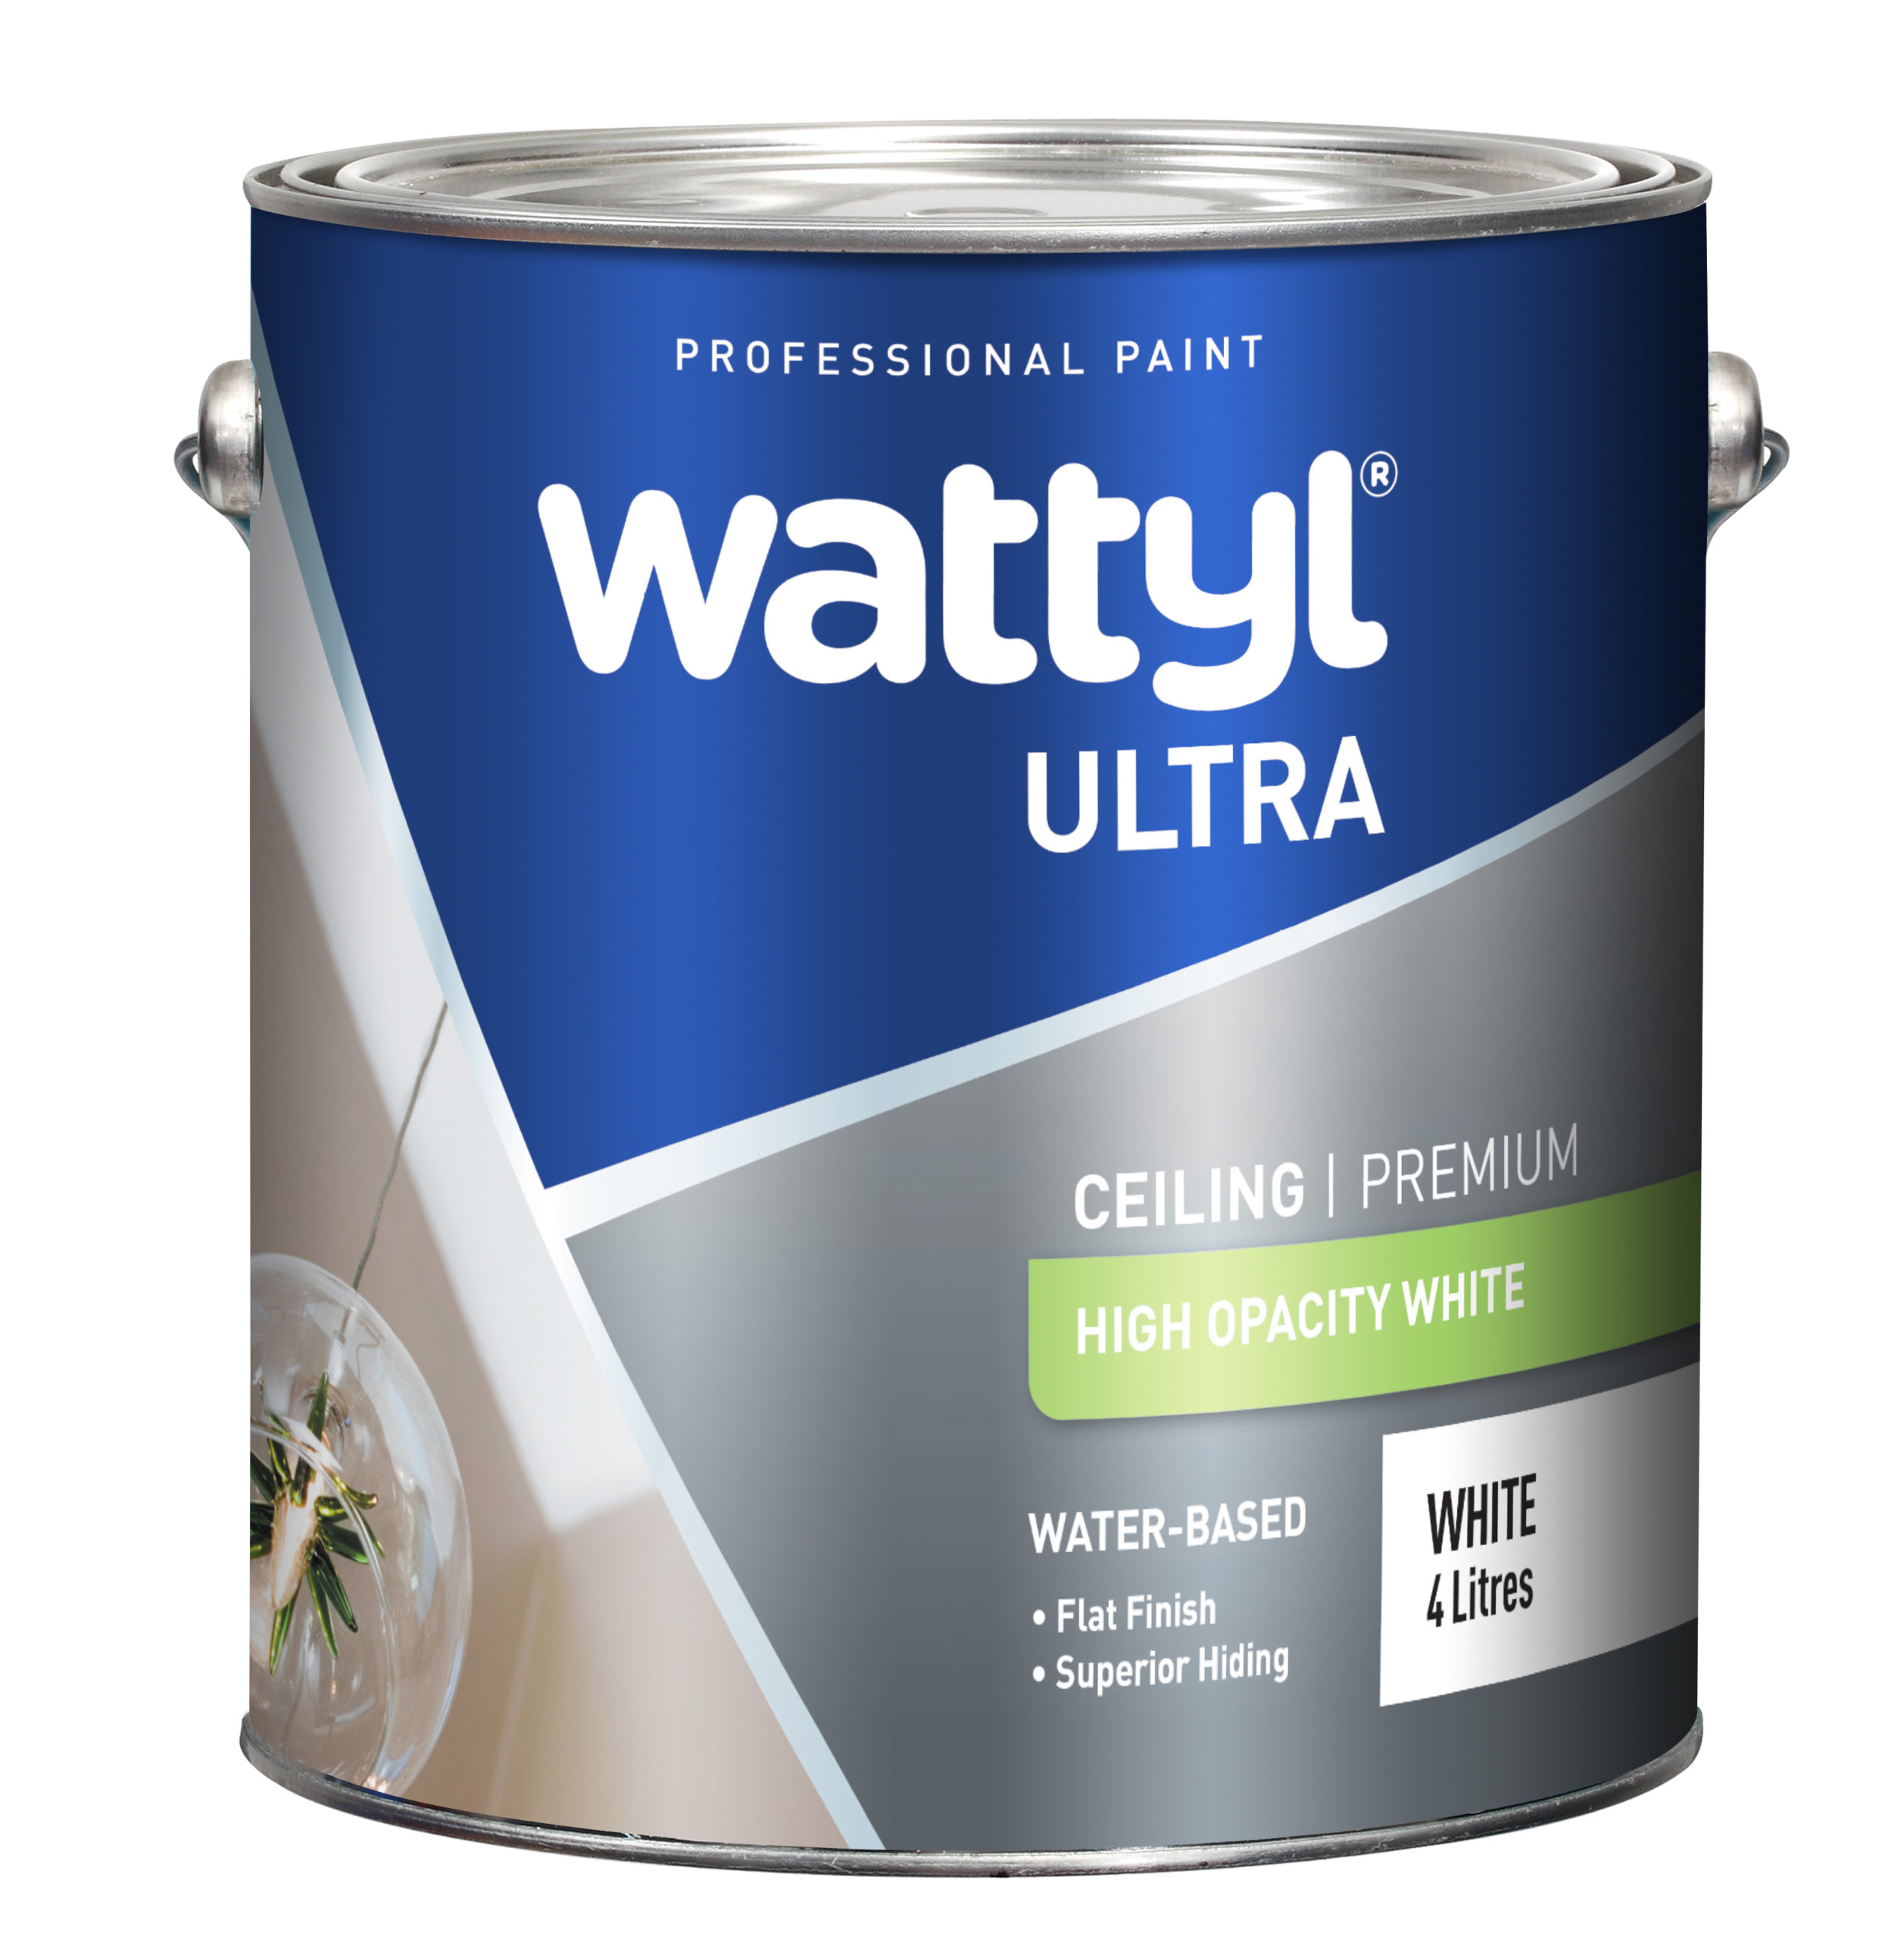 Wattyl Ultra Ceiling High Opacity White